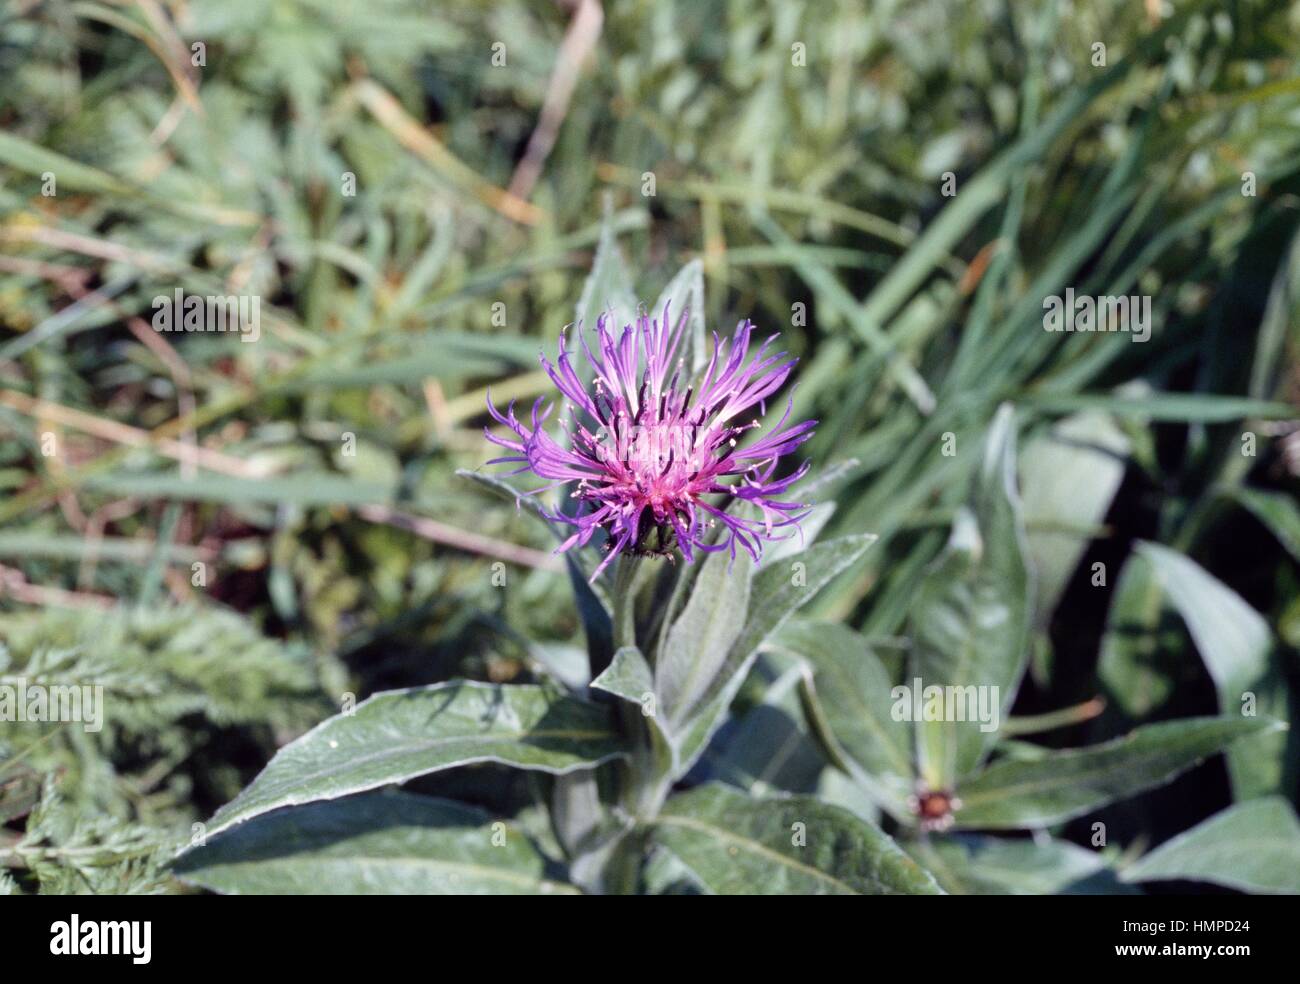 Perennial cornflower, mountain cornflower or bachelor's button (Cyanus montanus or Centaurea montana), Asteraceae. Stock Photo